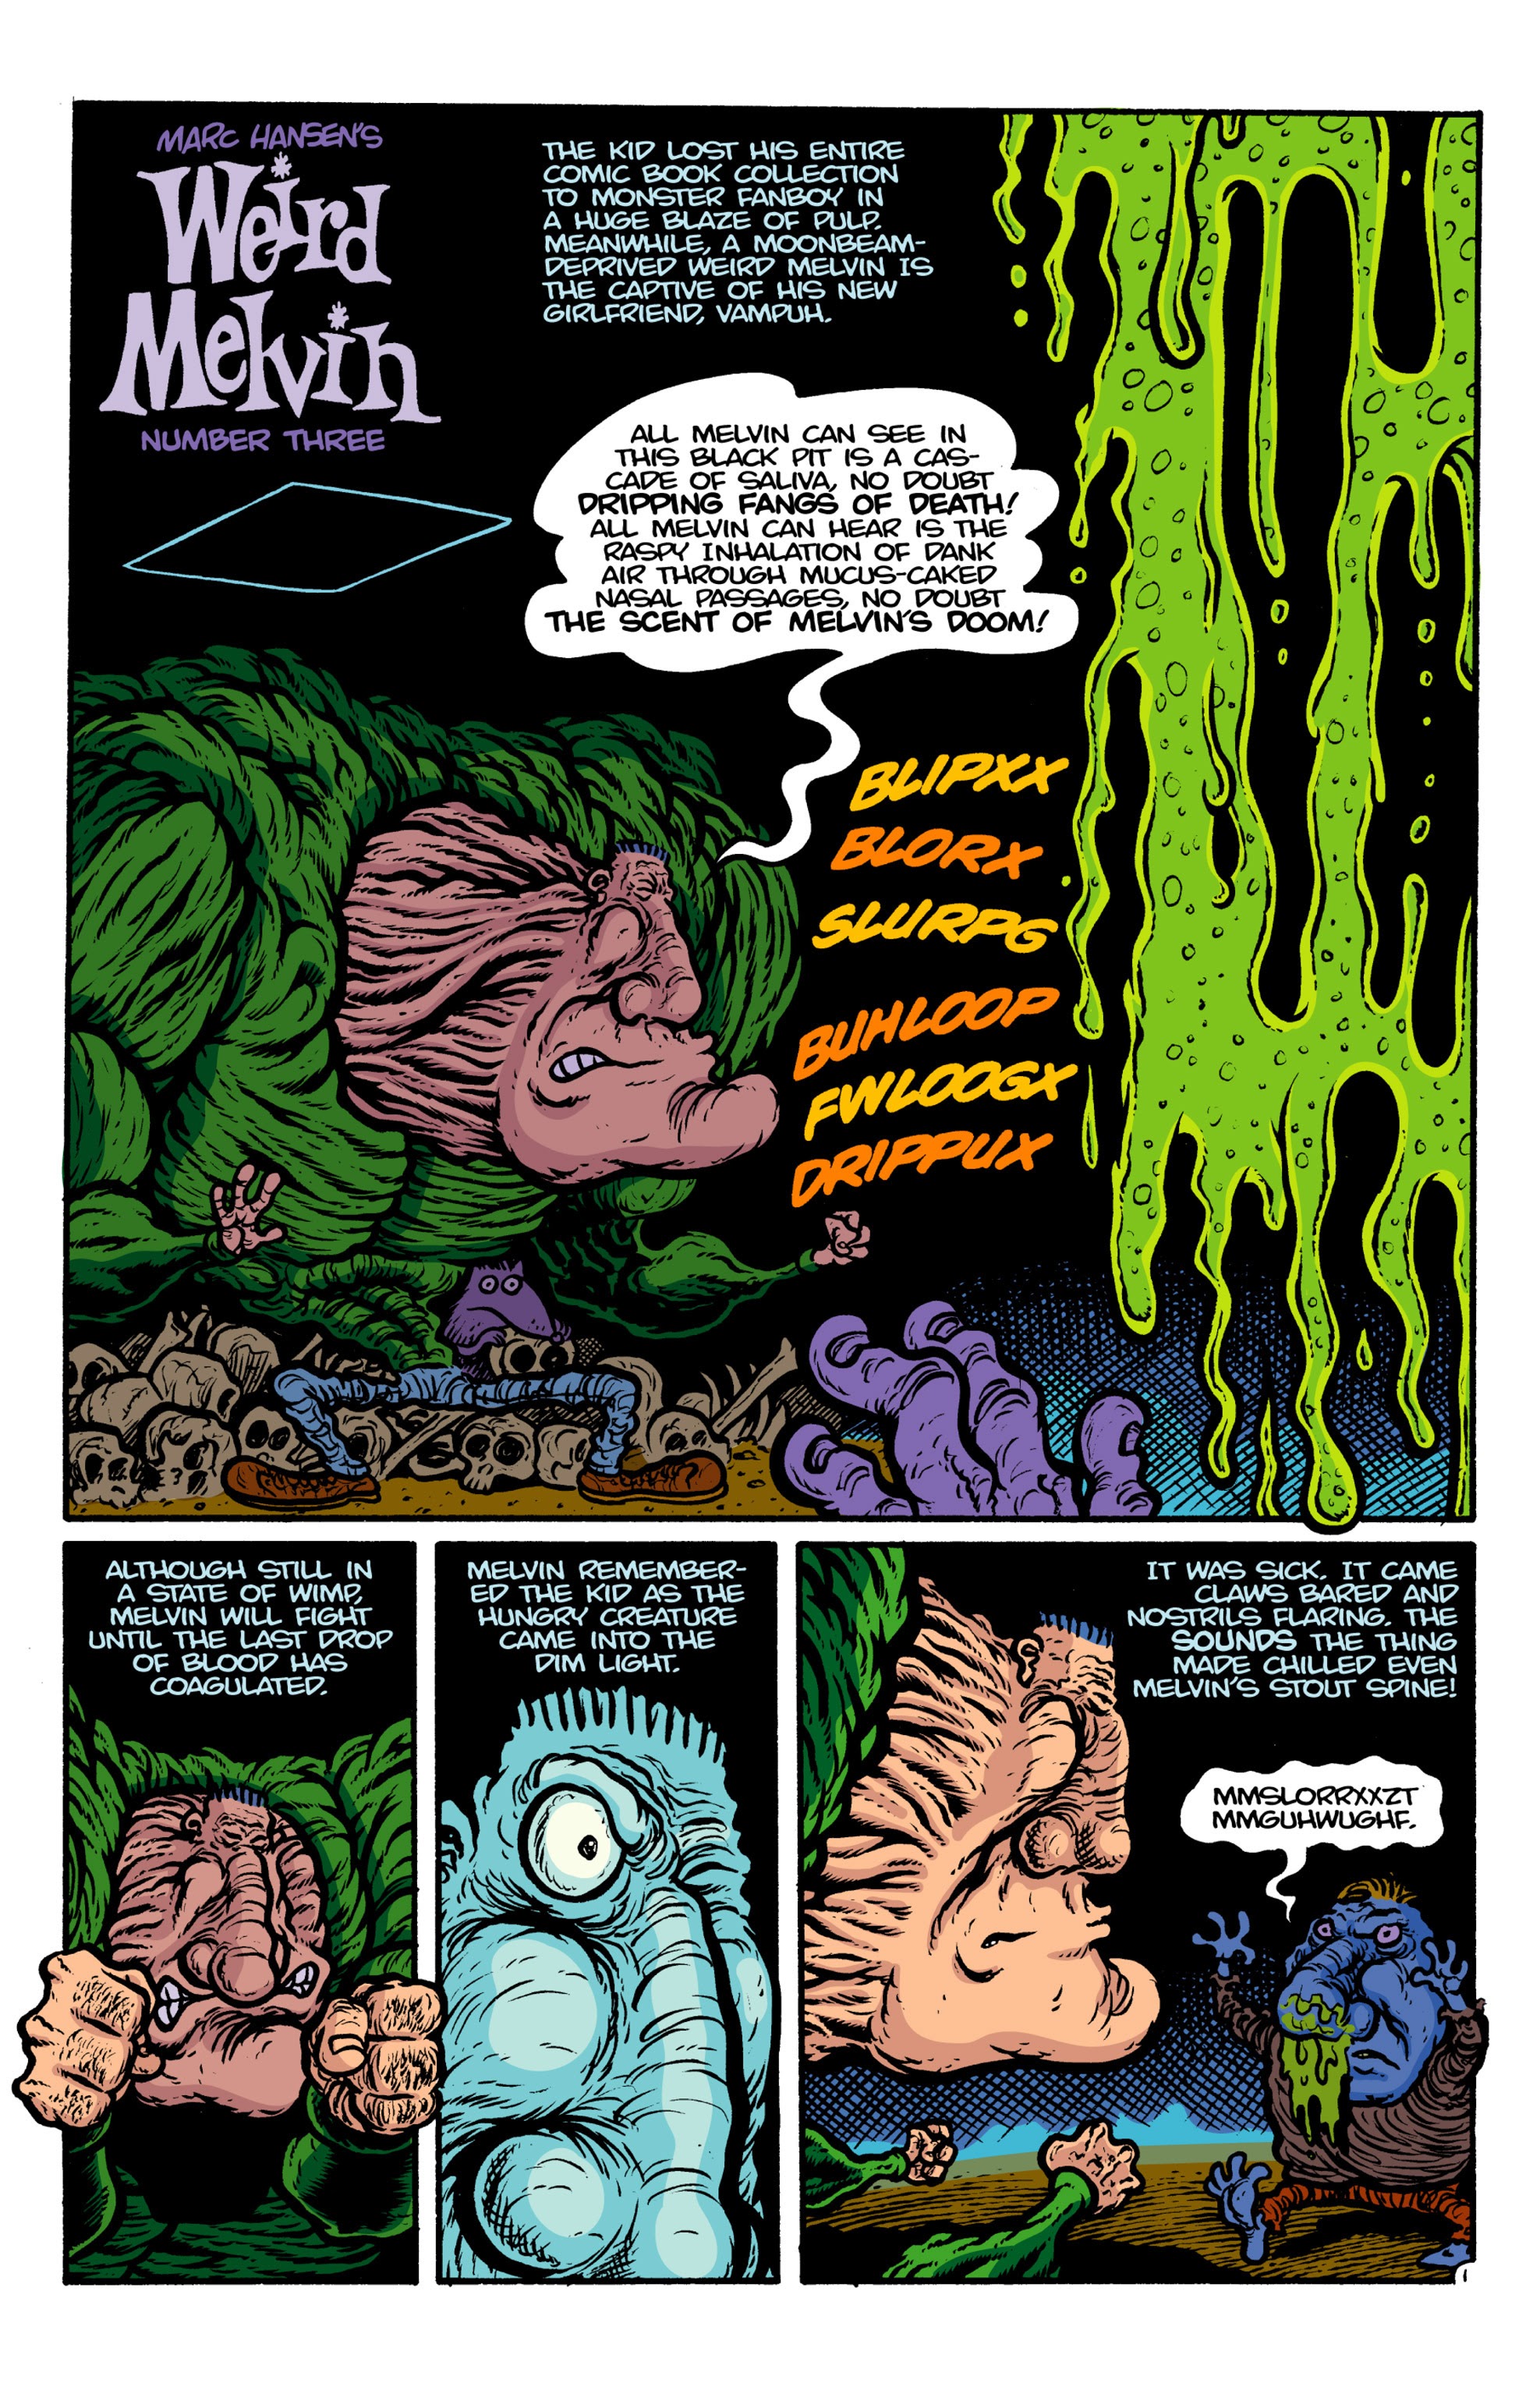 Read online Weird Melvin comic -  Issue #3 - 3